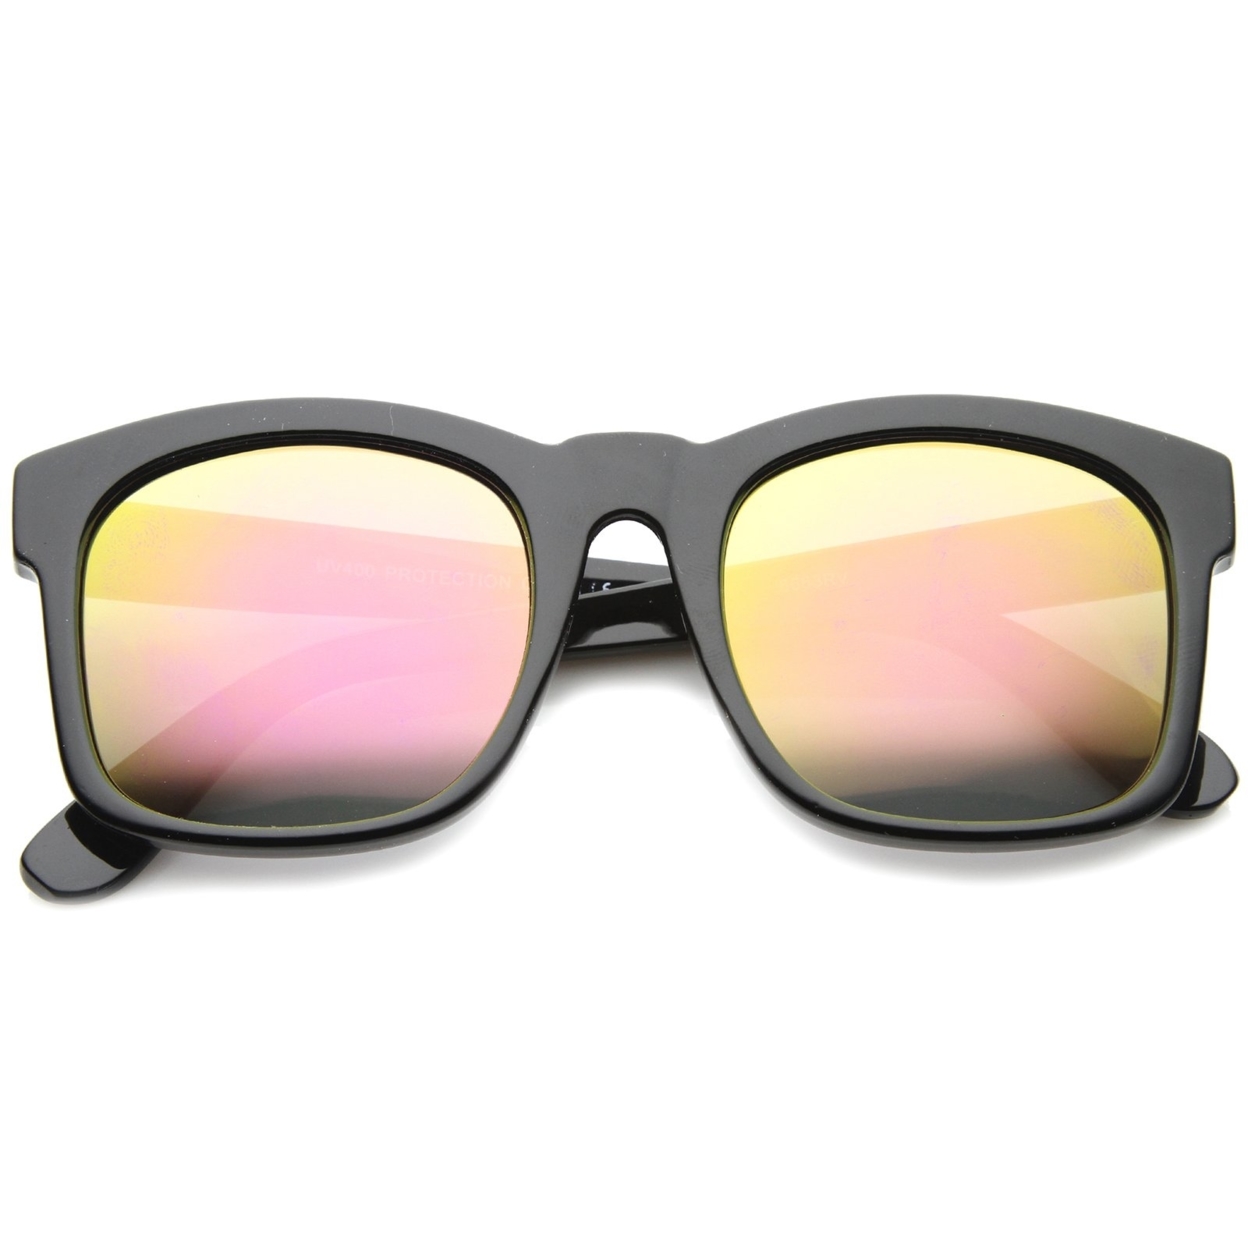 Mod Fashion Oversized Bold Frame Flash Mirror Horn Rimmed Sunglasses 61mm - Black / Ice